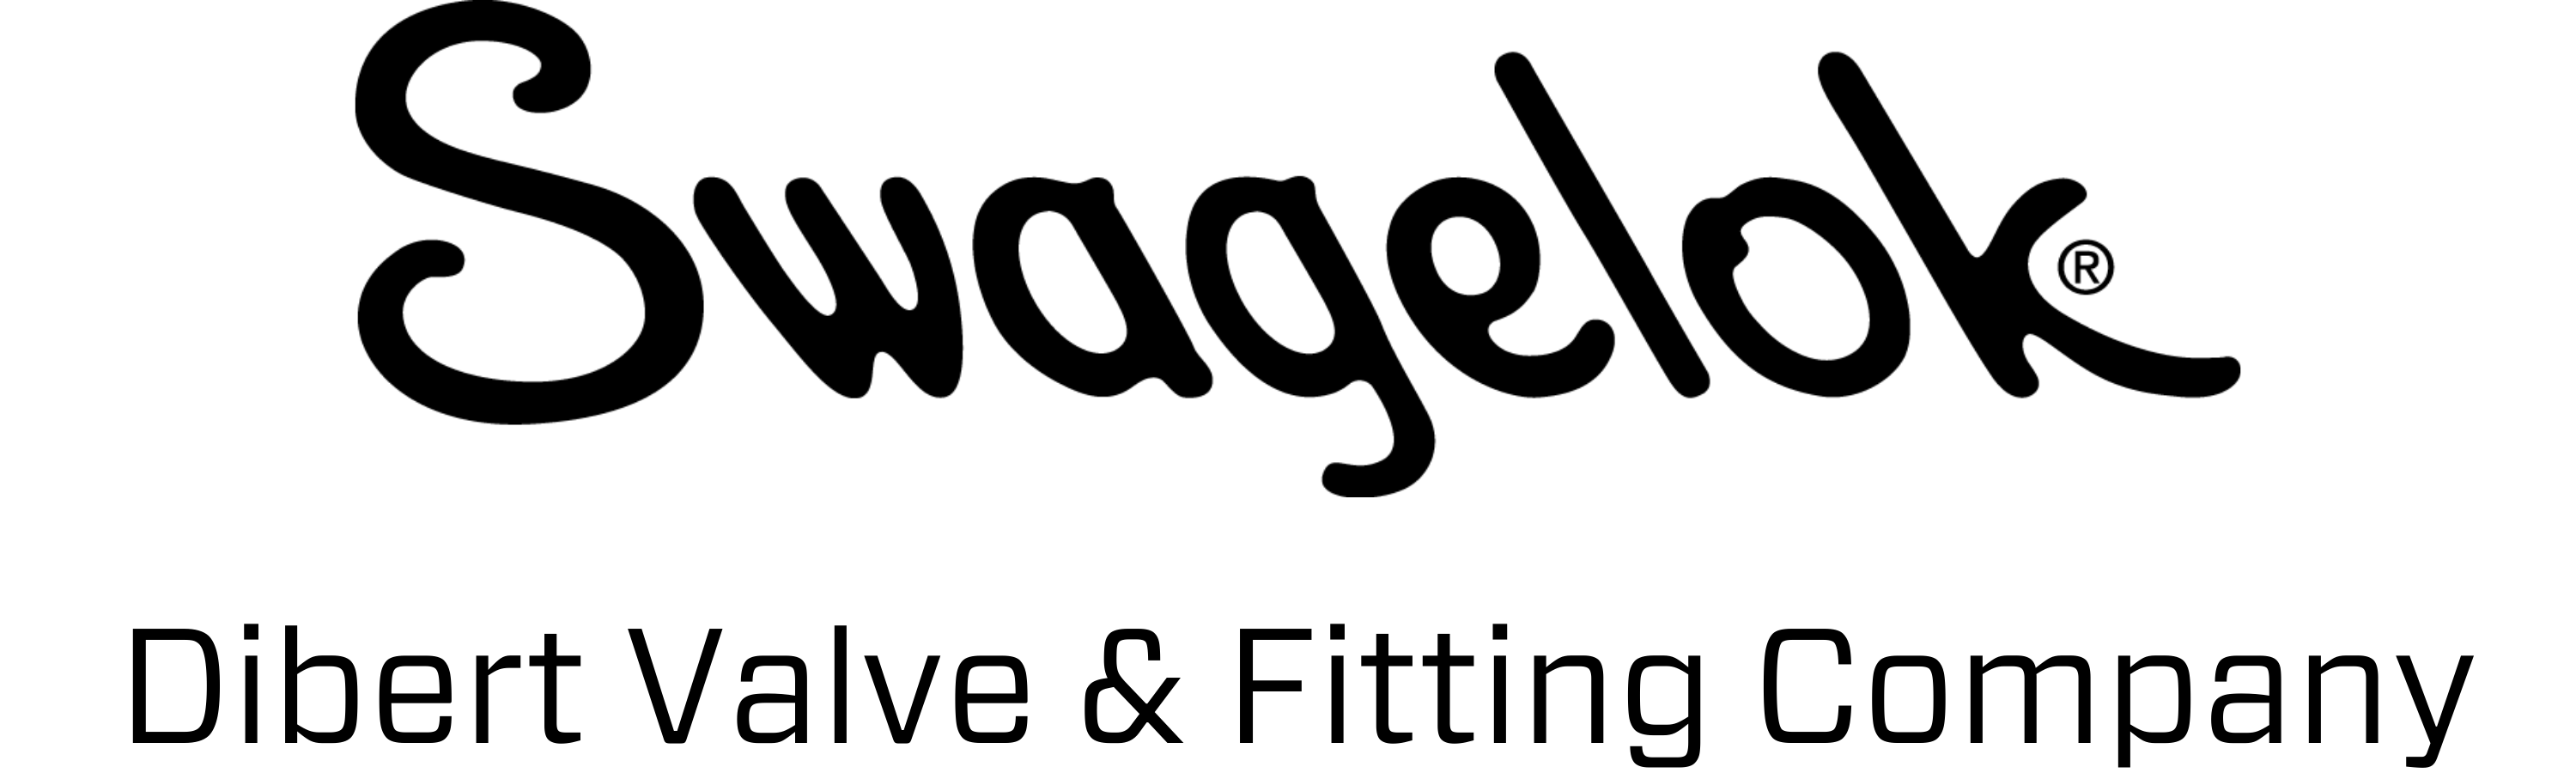 swagelok logo